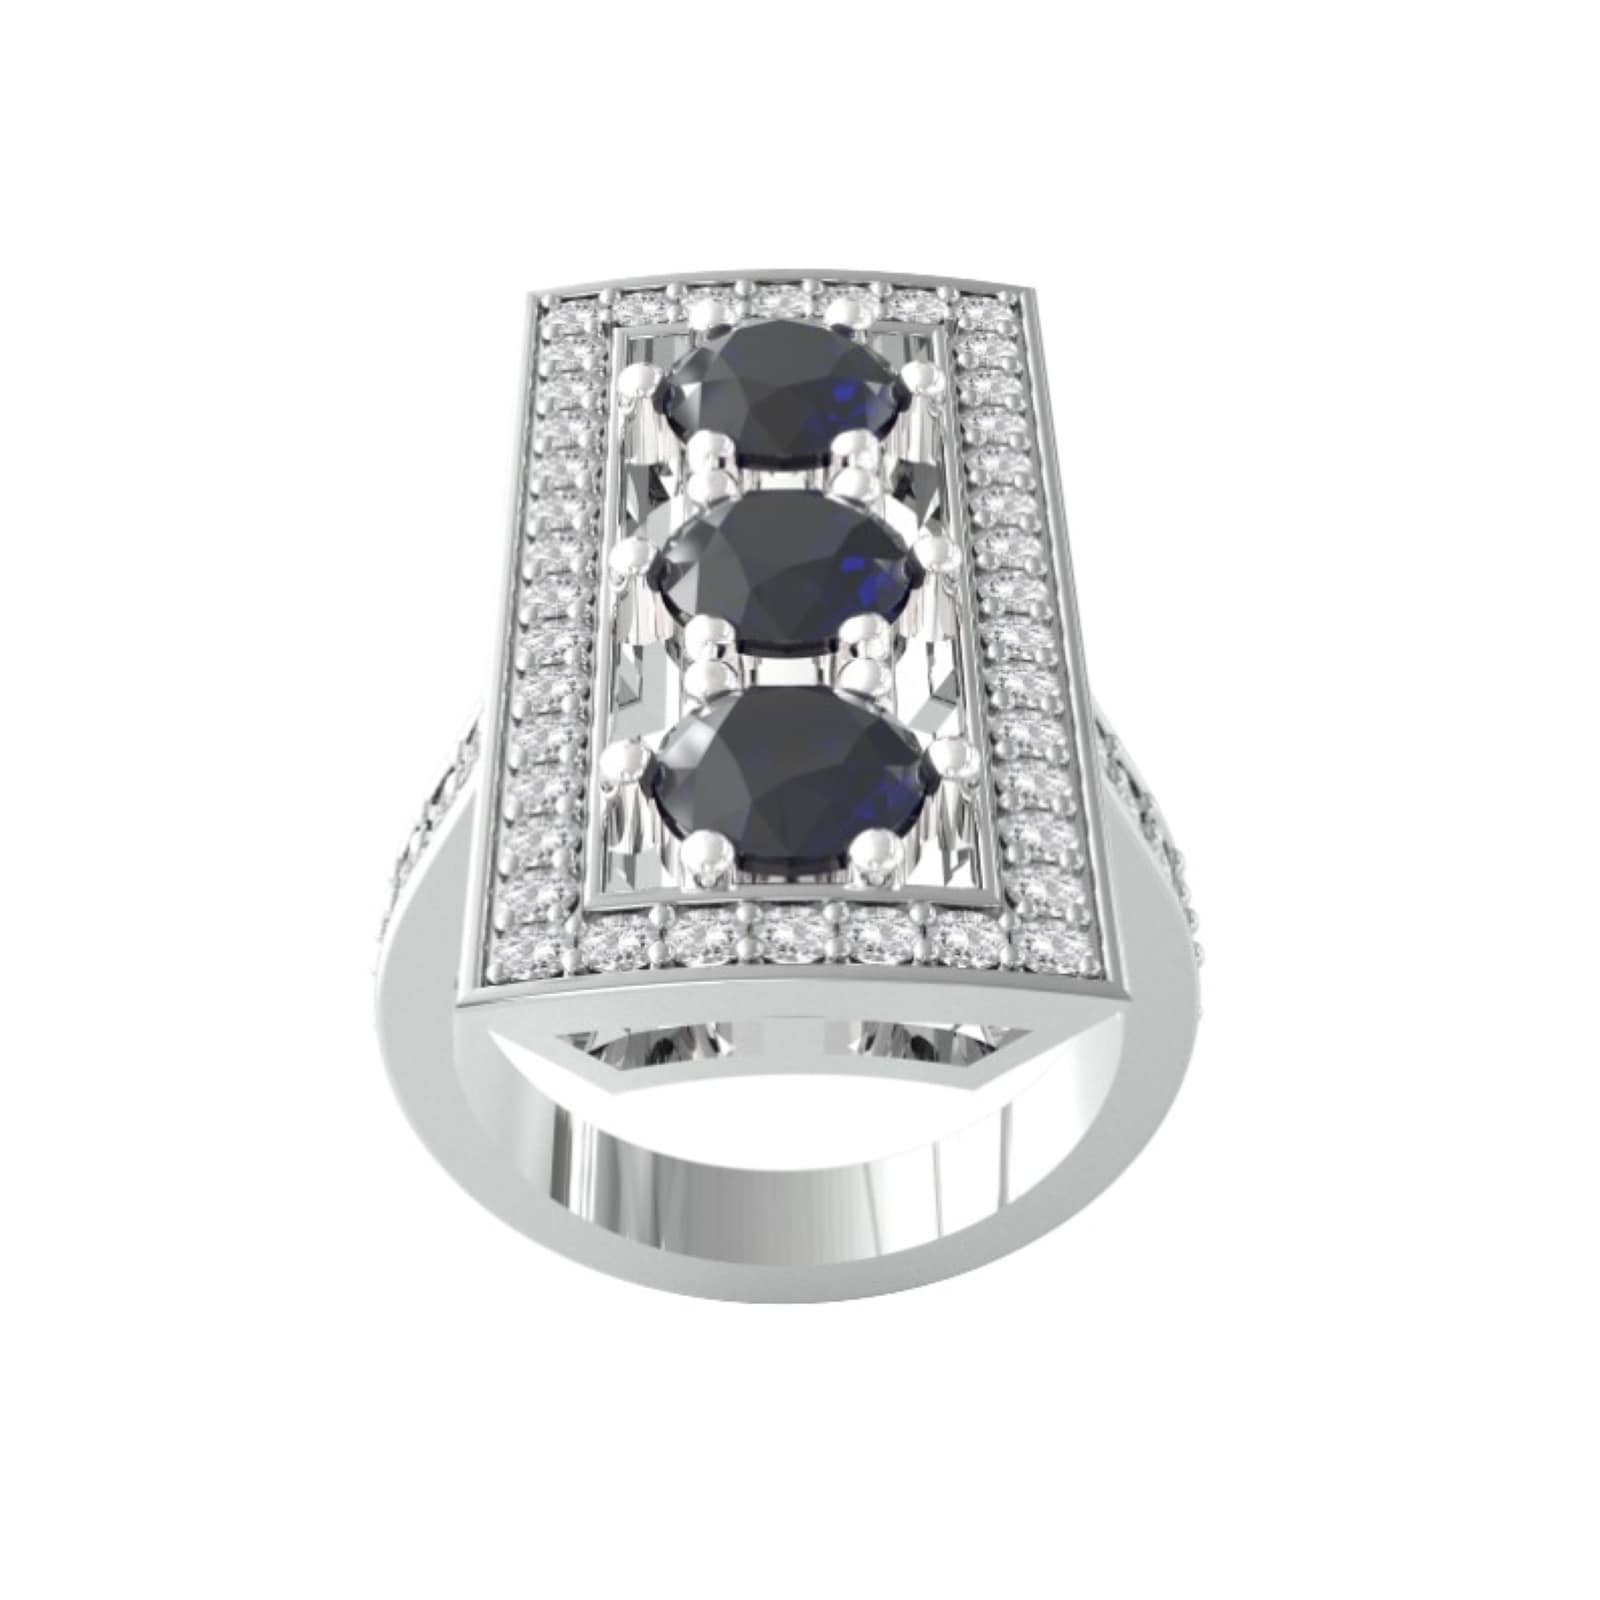 18ct White Gold Art Deco Sapphire & Diamond Plaque Ring - Ring Size O.5